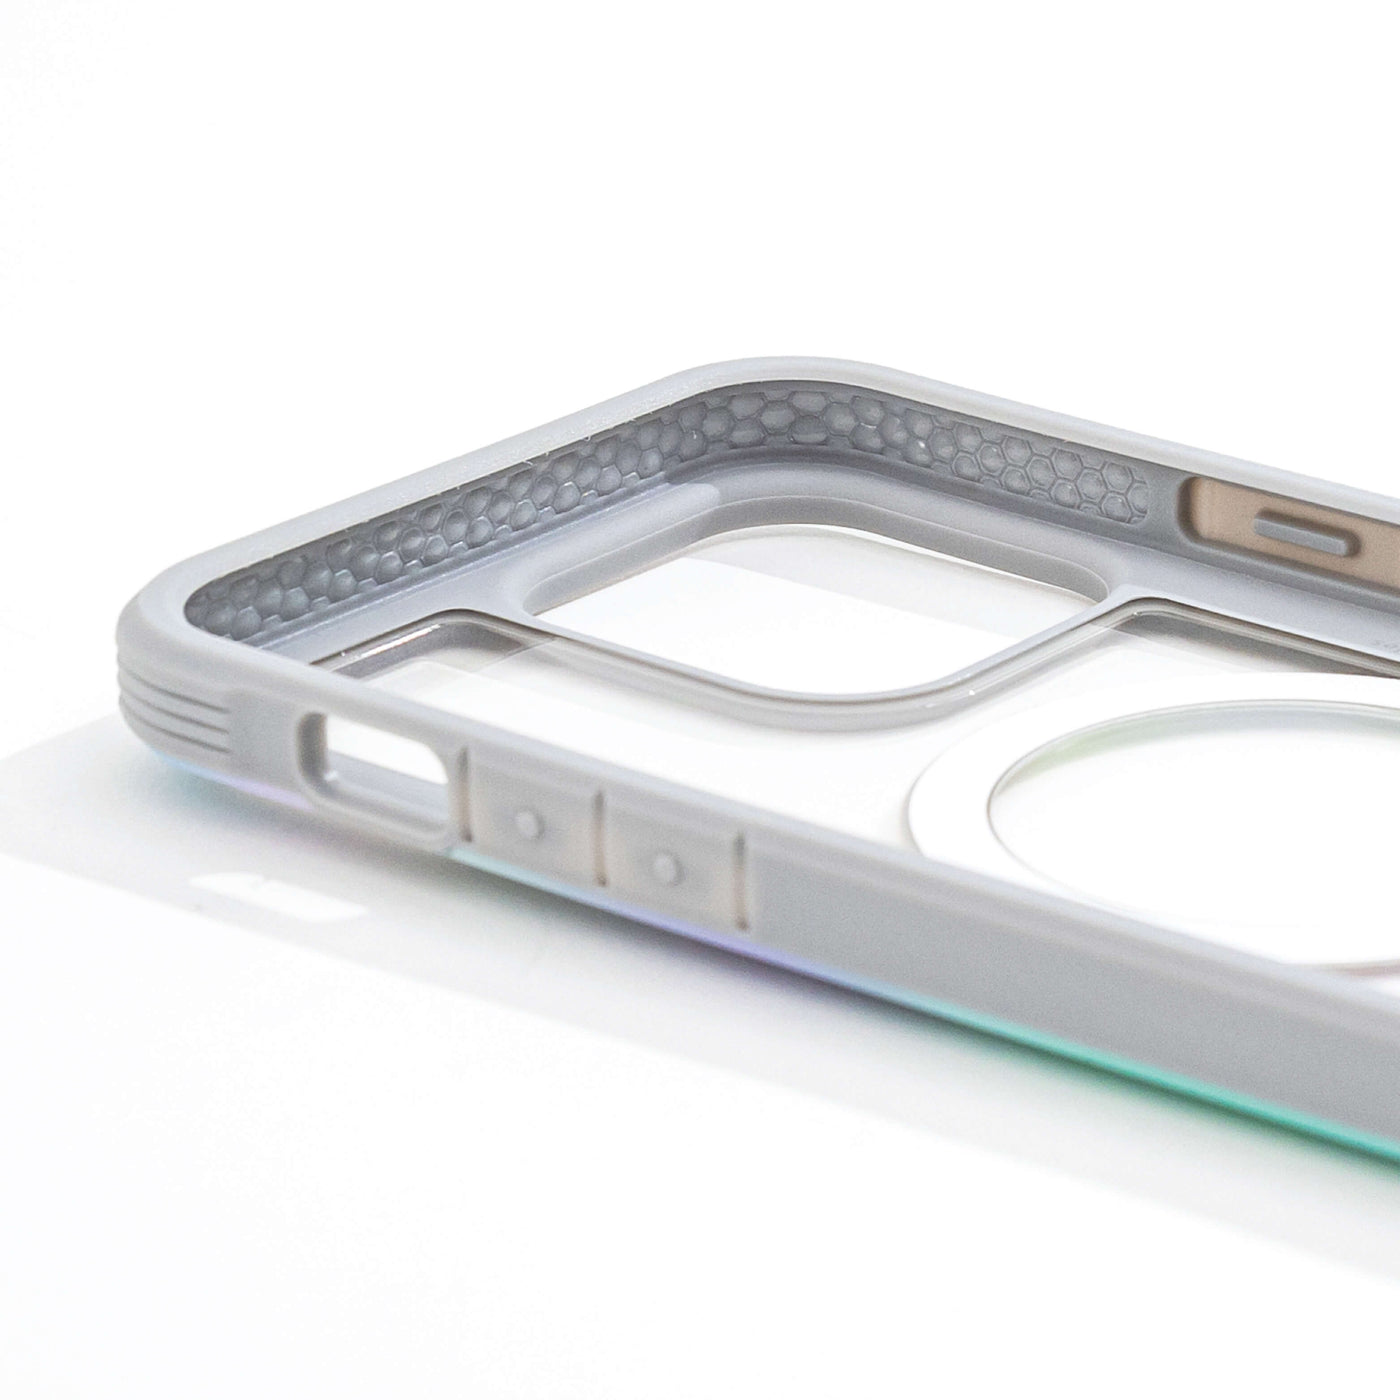 iPhone 15 Pro Case - Shield 2.0 Quartz